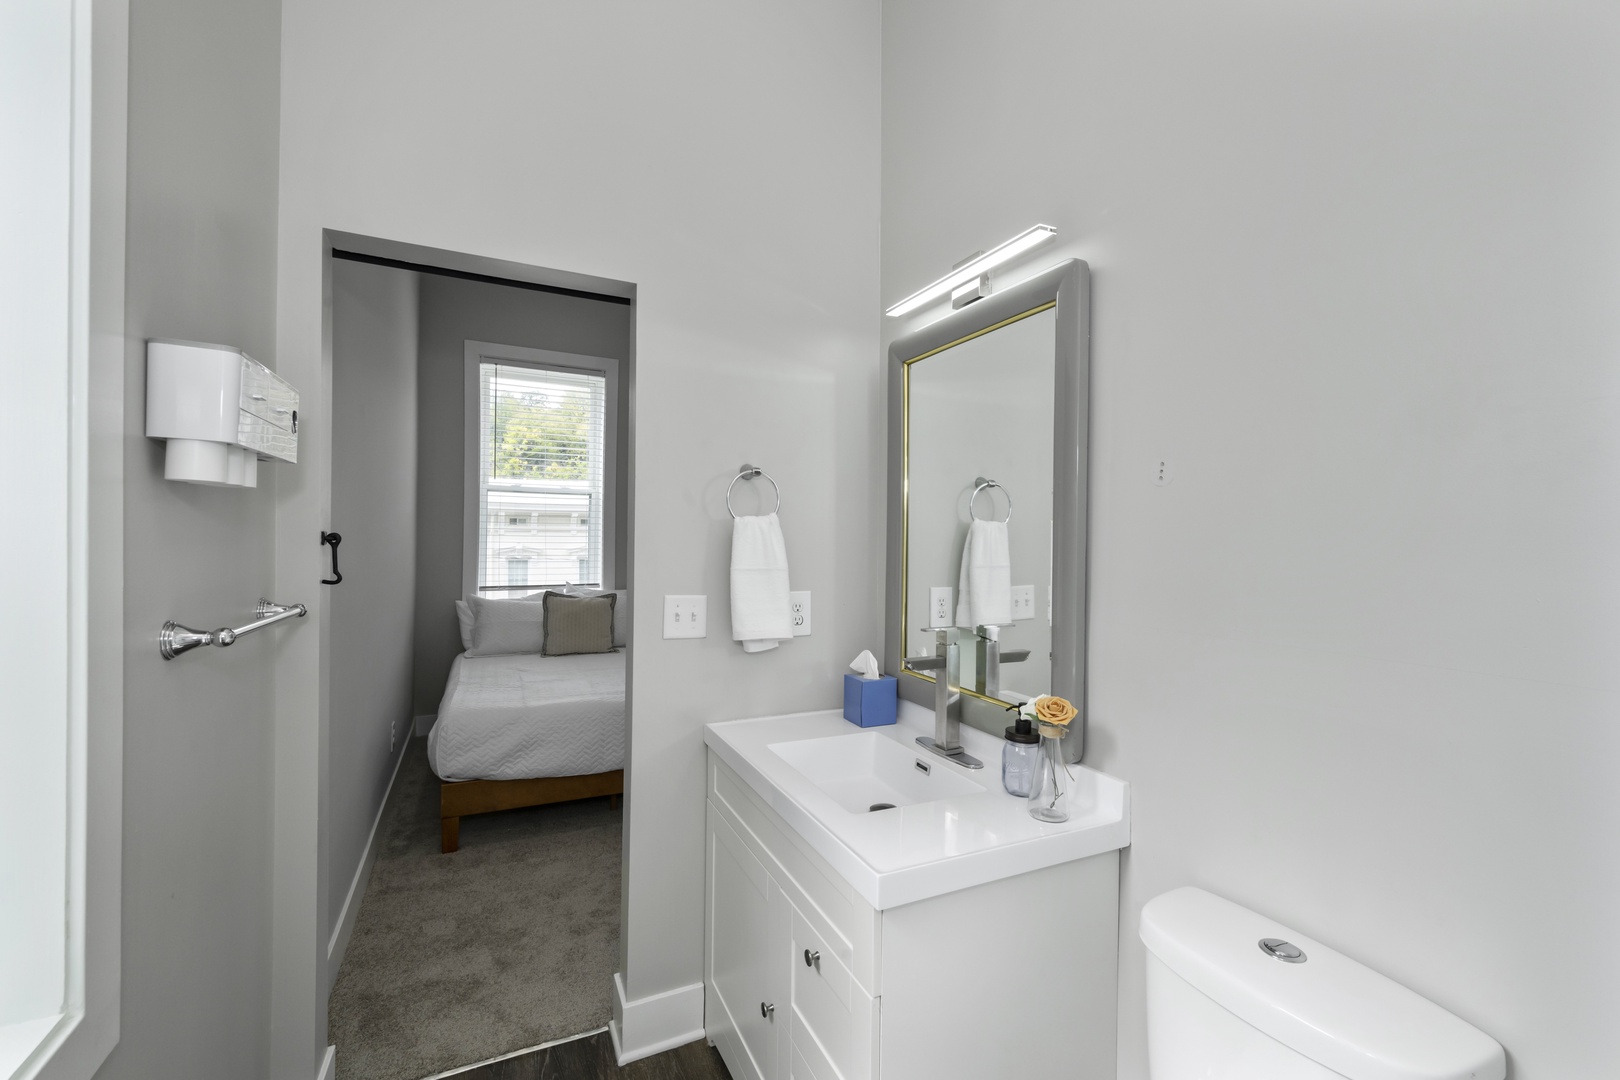 The 2nd bedroom en suite bath offers a single vanity & glass shower